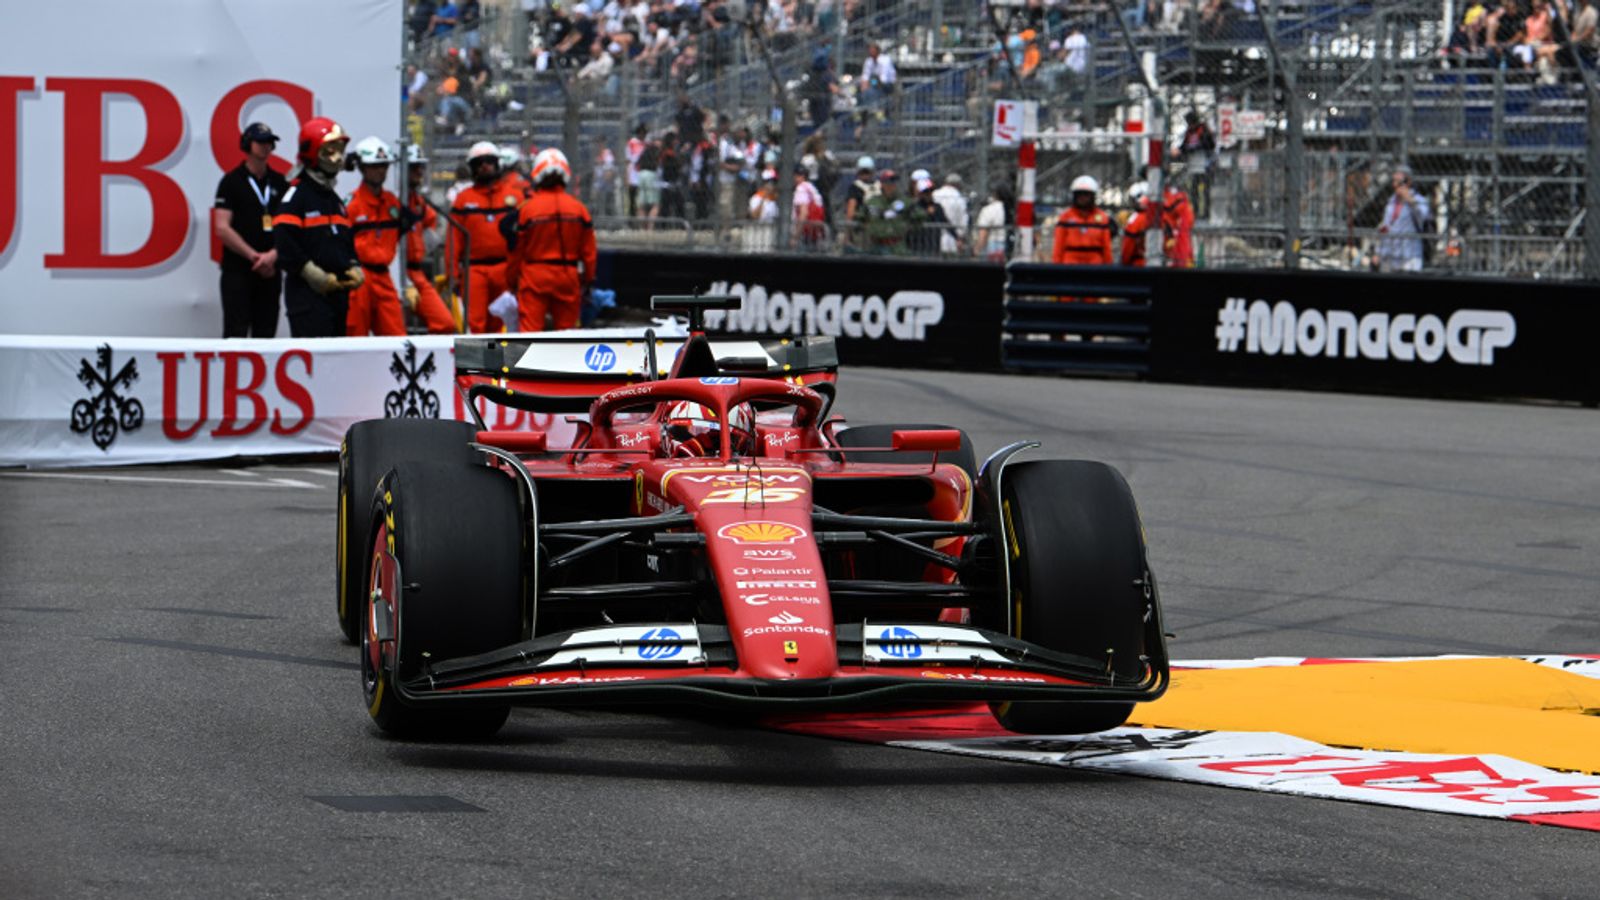 GP de Mónaco: Charles Leclerc encabeza la segunda práctica de Lewis Hamilton mientras Ferrari libera un ritmo impresionante |  Noticias F1